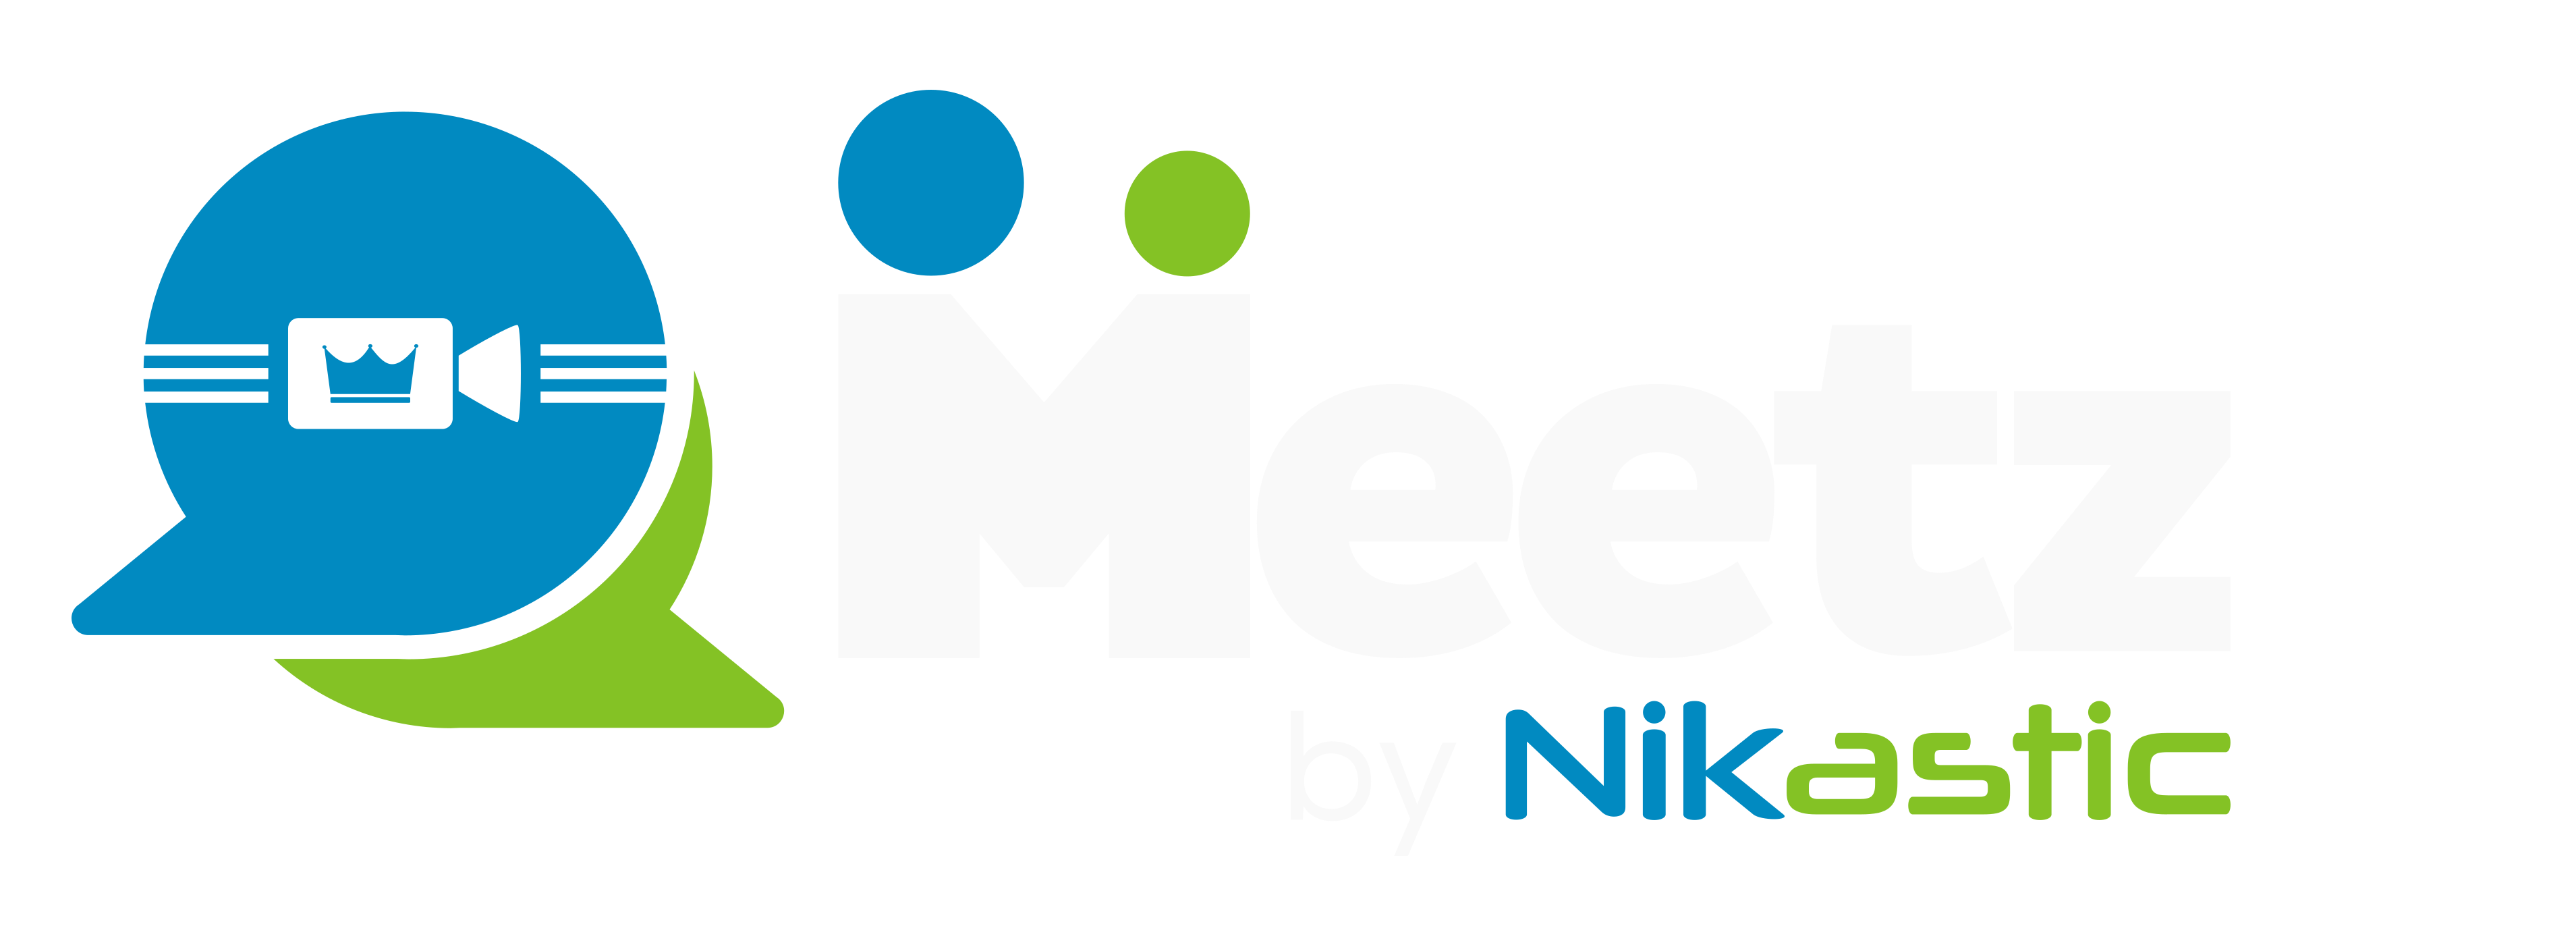 Nikastic Meetz